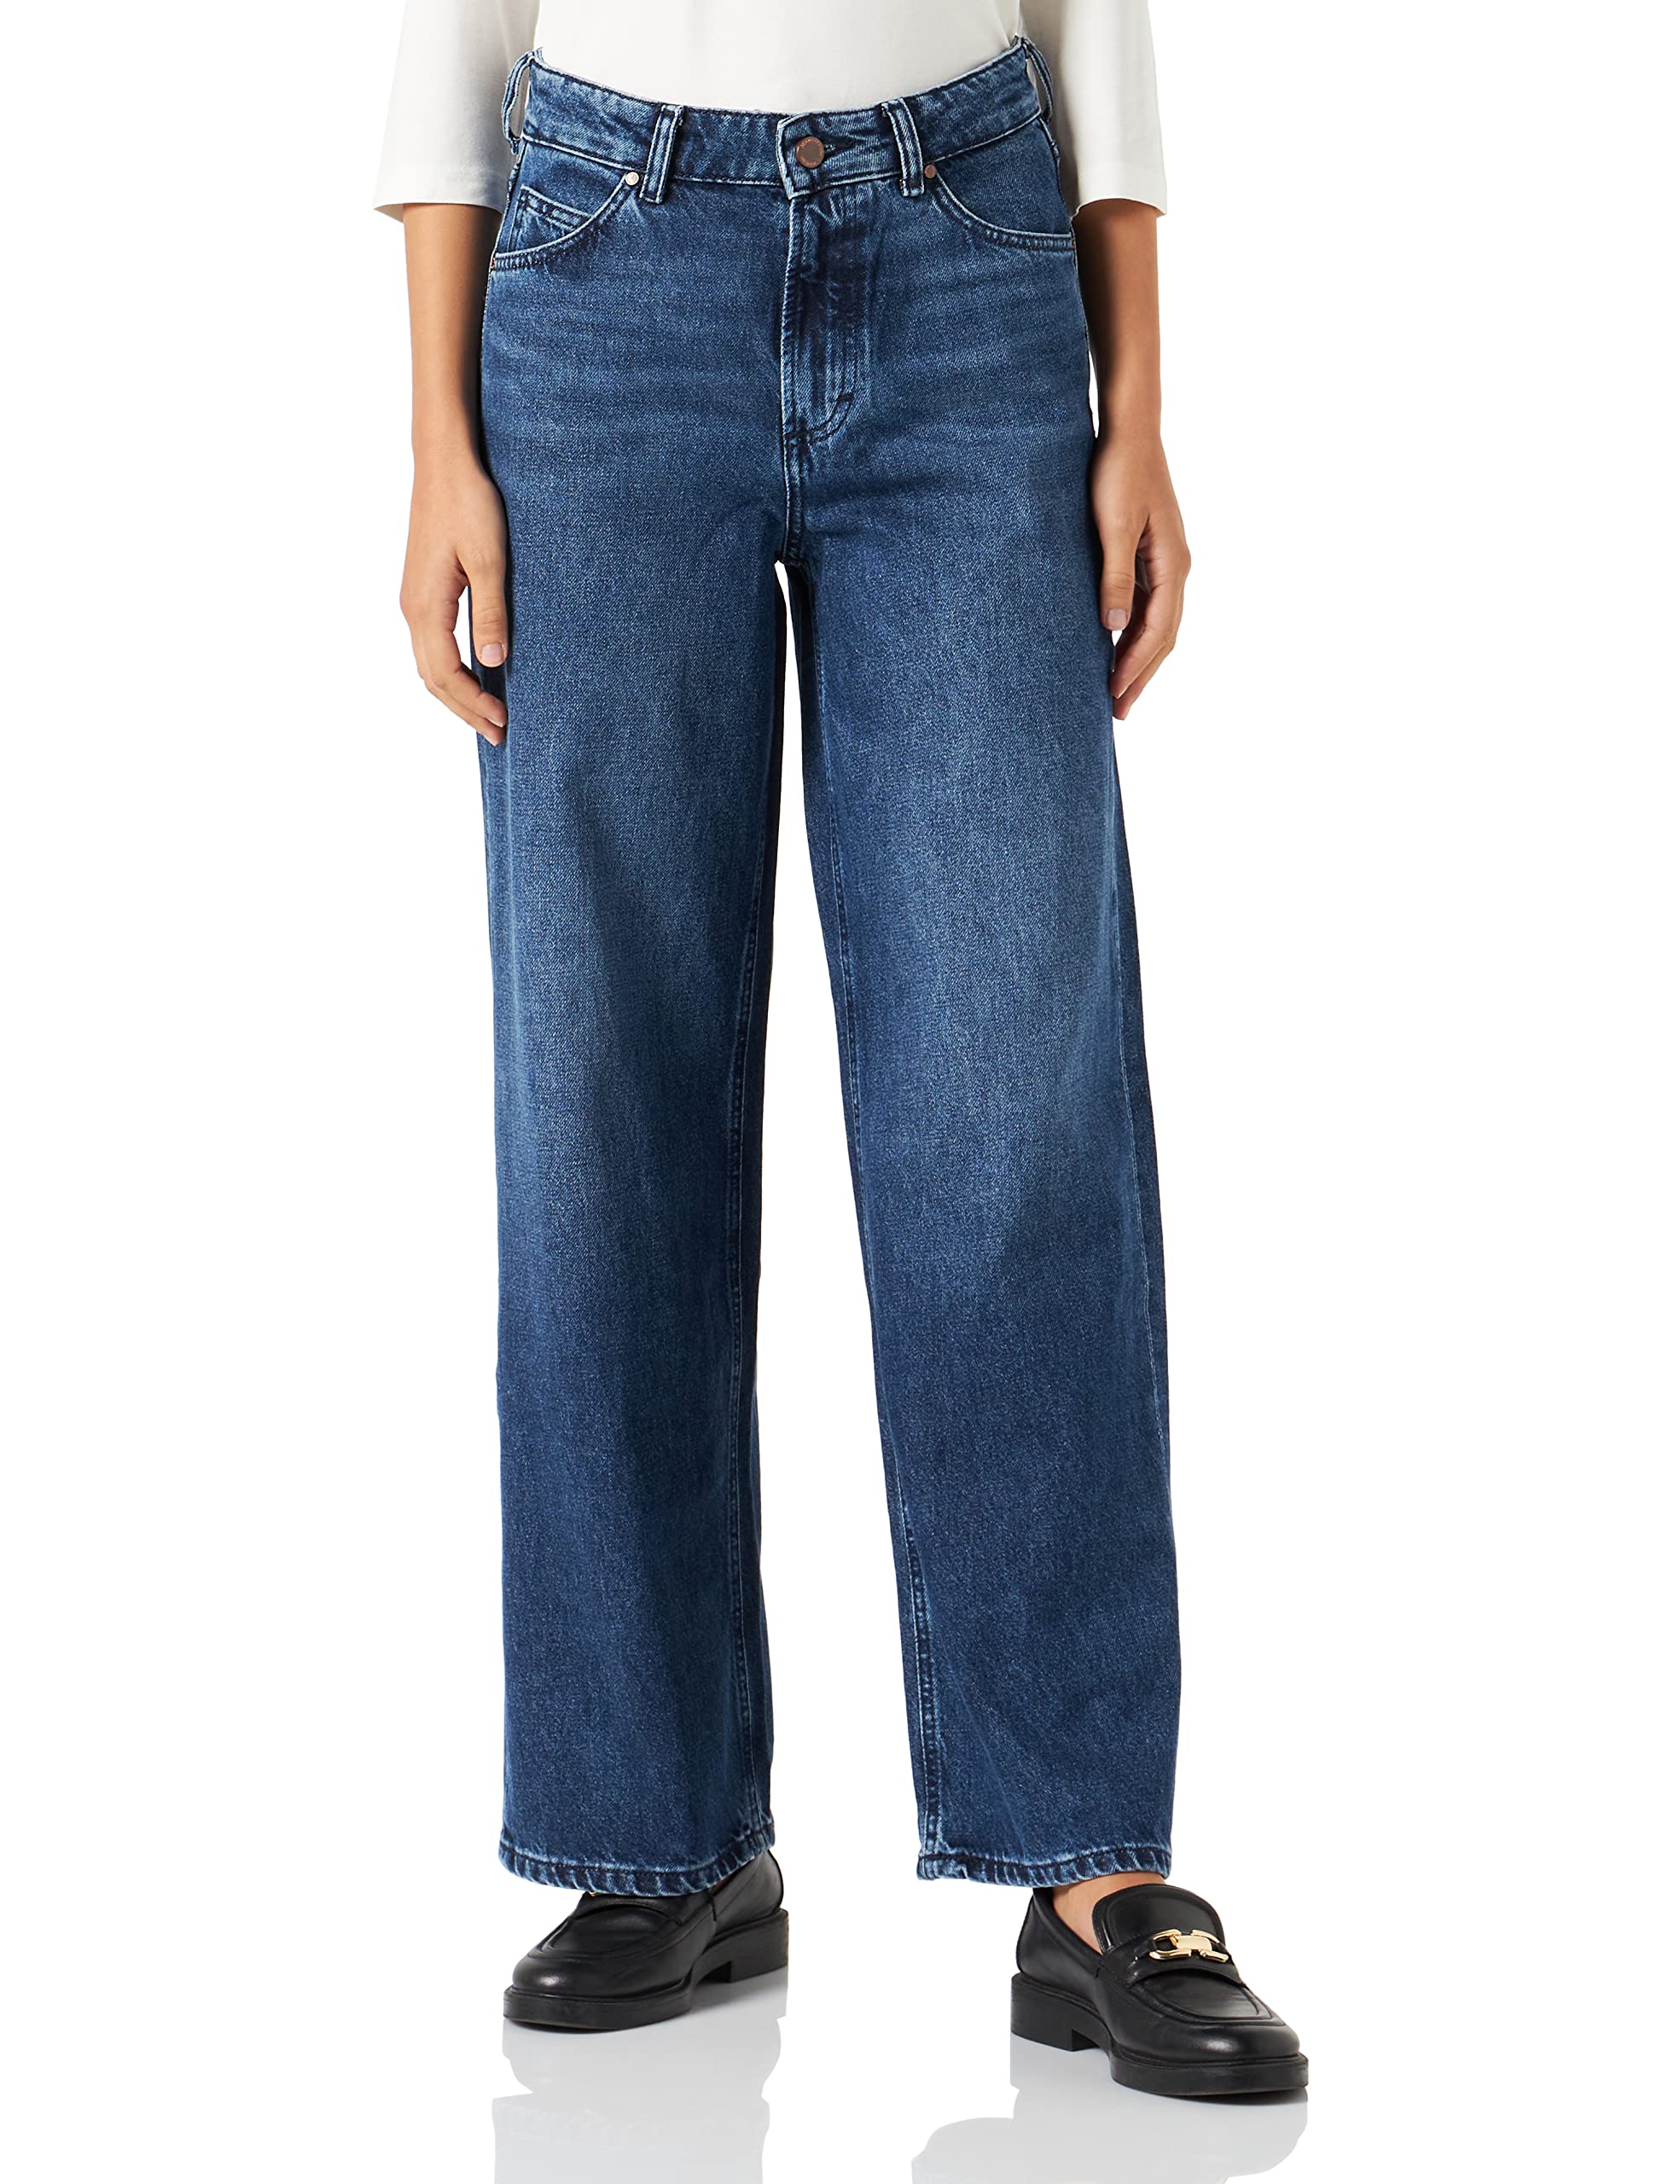 Marc O'Polo DENIM Hose – Damen Jeans – klassische Damenhose im Five-Pocket-Stil aus nachhaltiger Baumwolle W25/L32